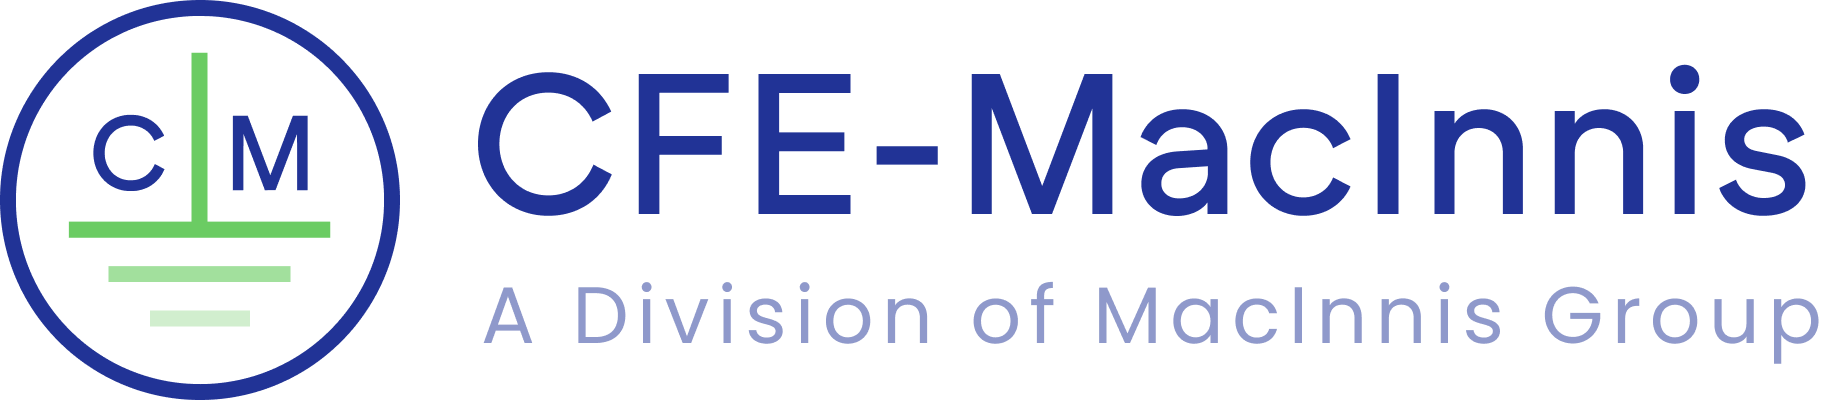 CFE-MacInnis company logo - A division of Macinnis group